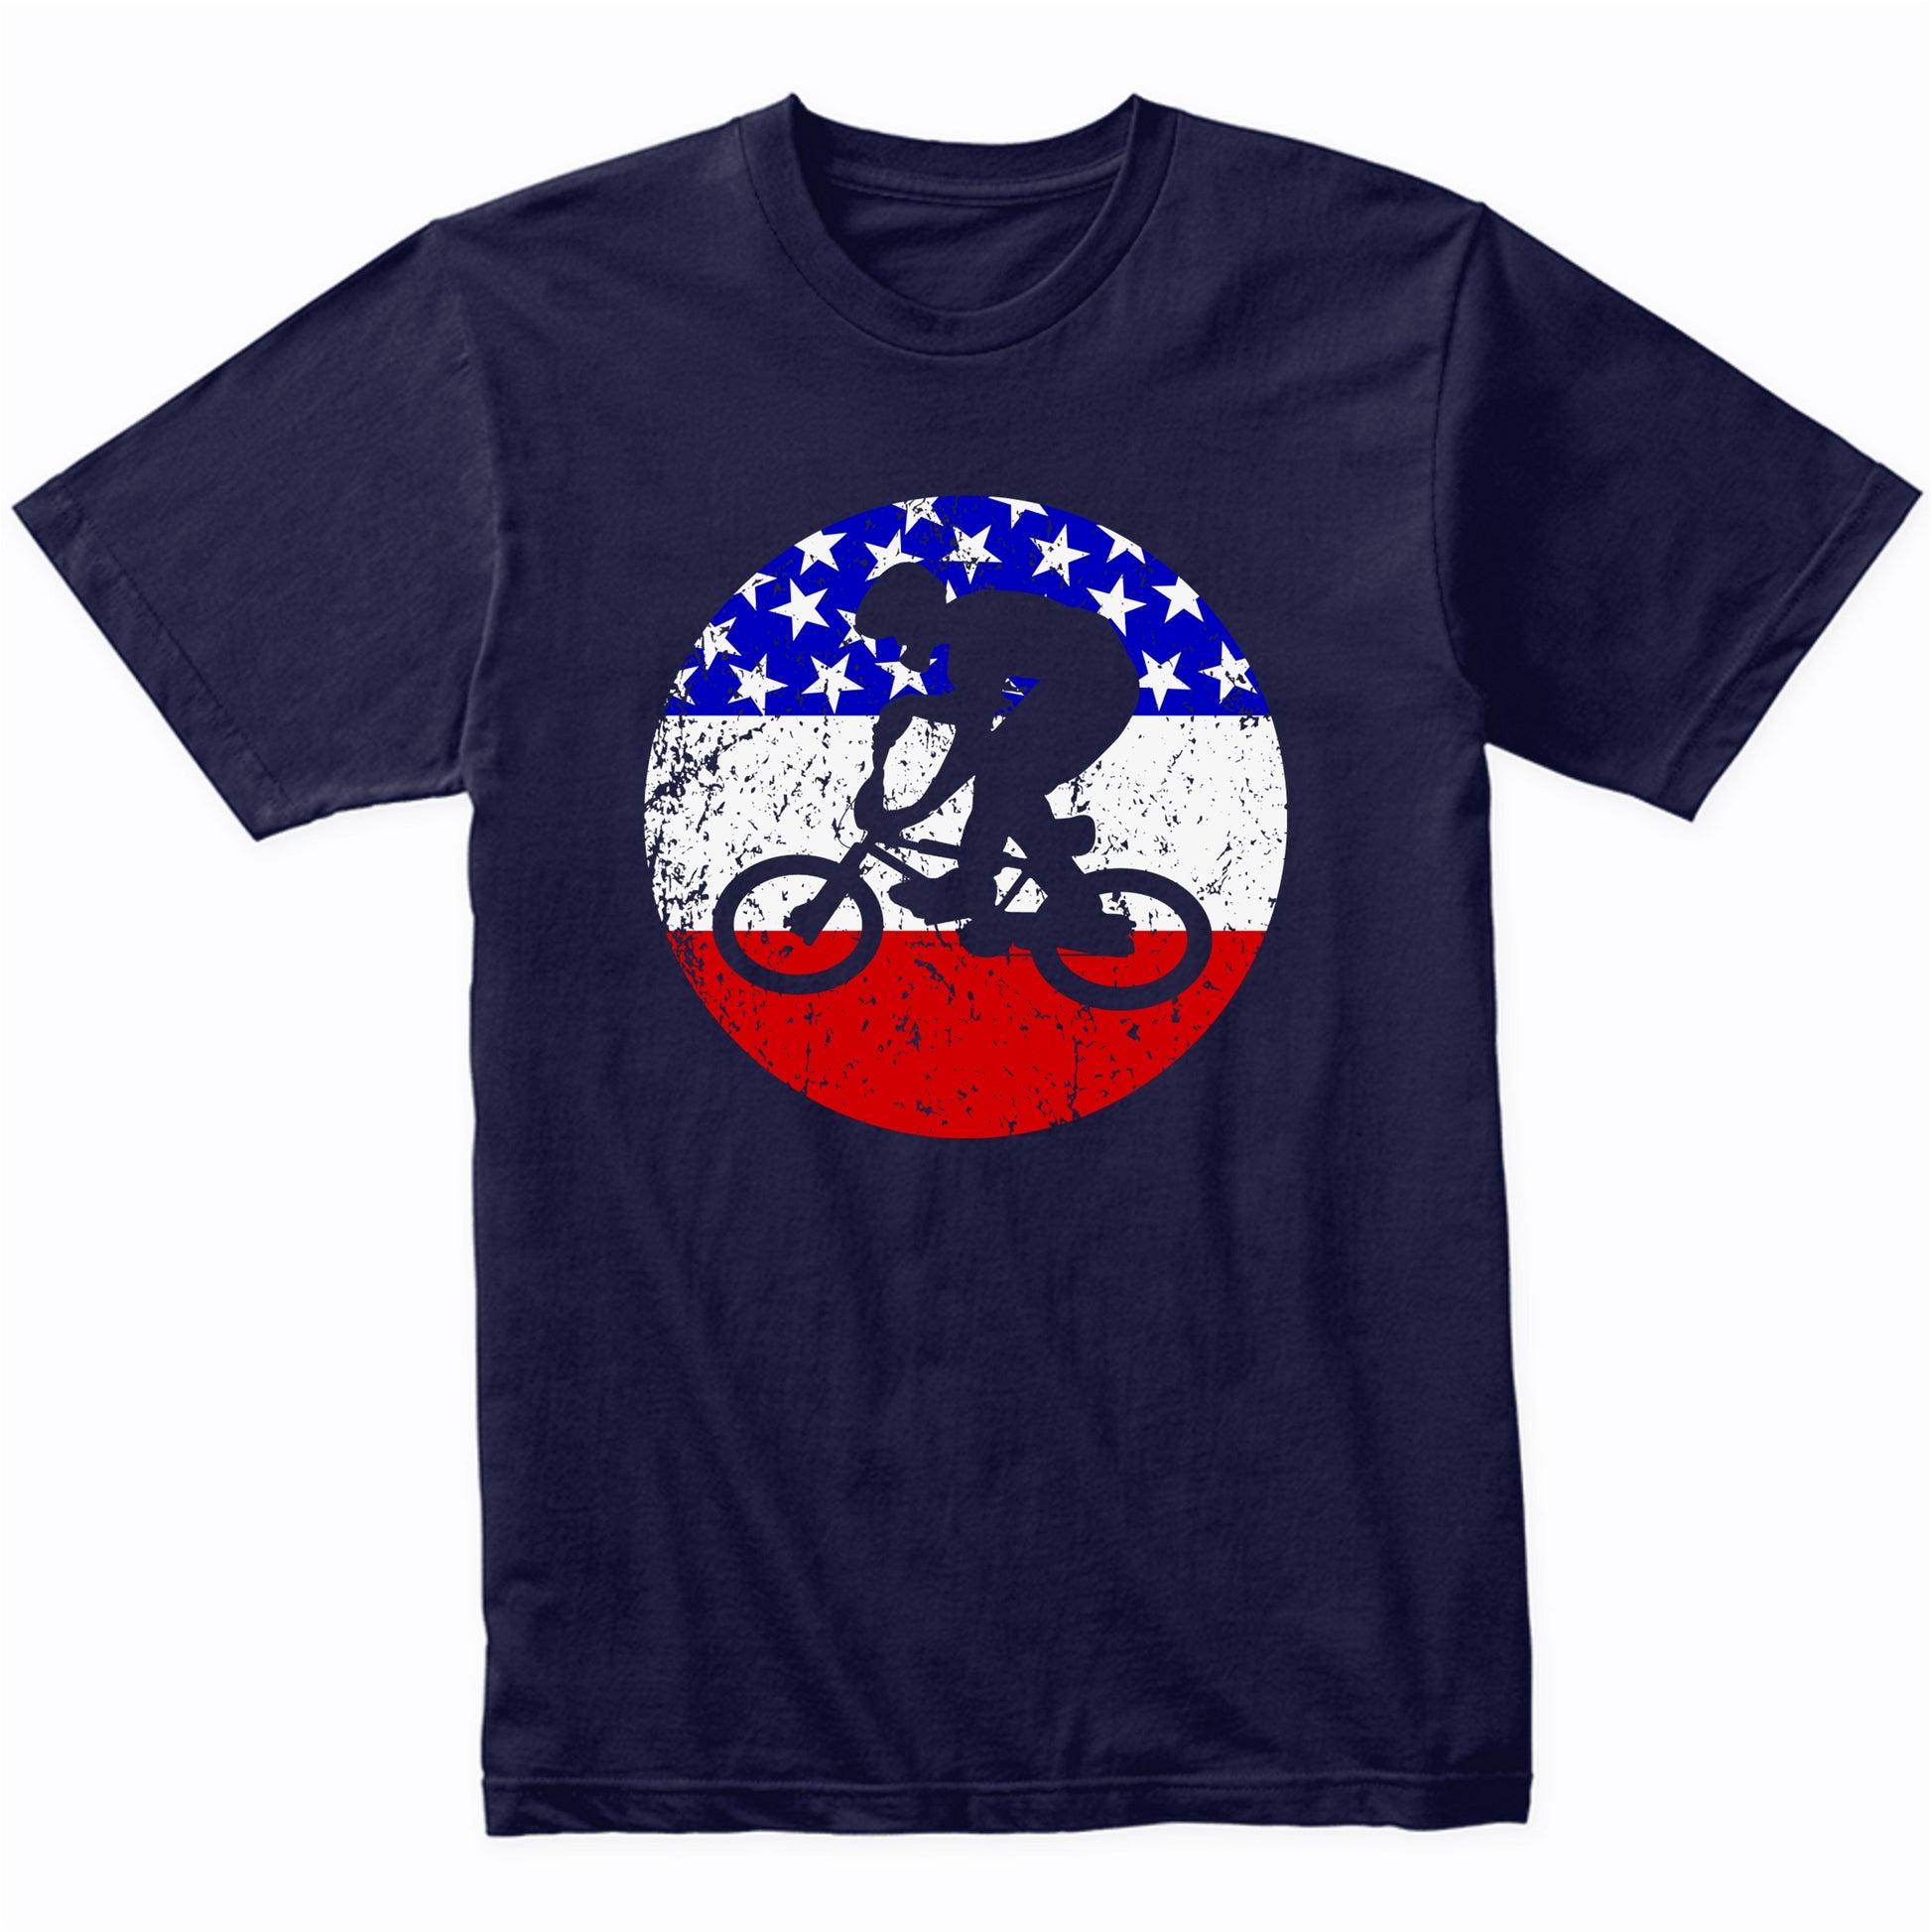 American Flag BMX Shirt - Retro BMX Bike Rider T-Shirt